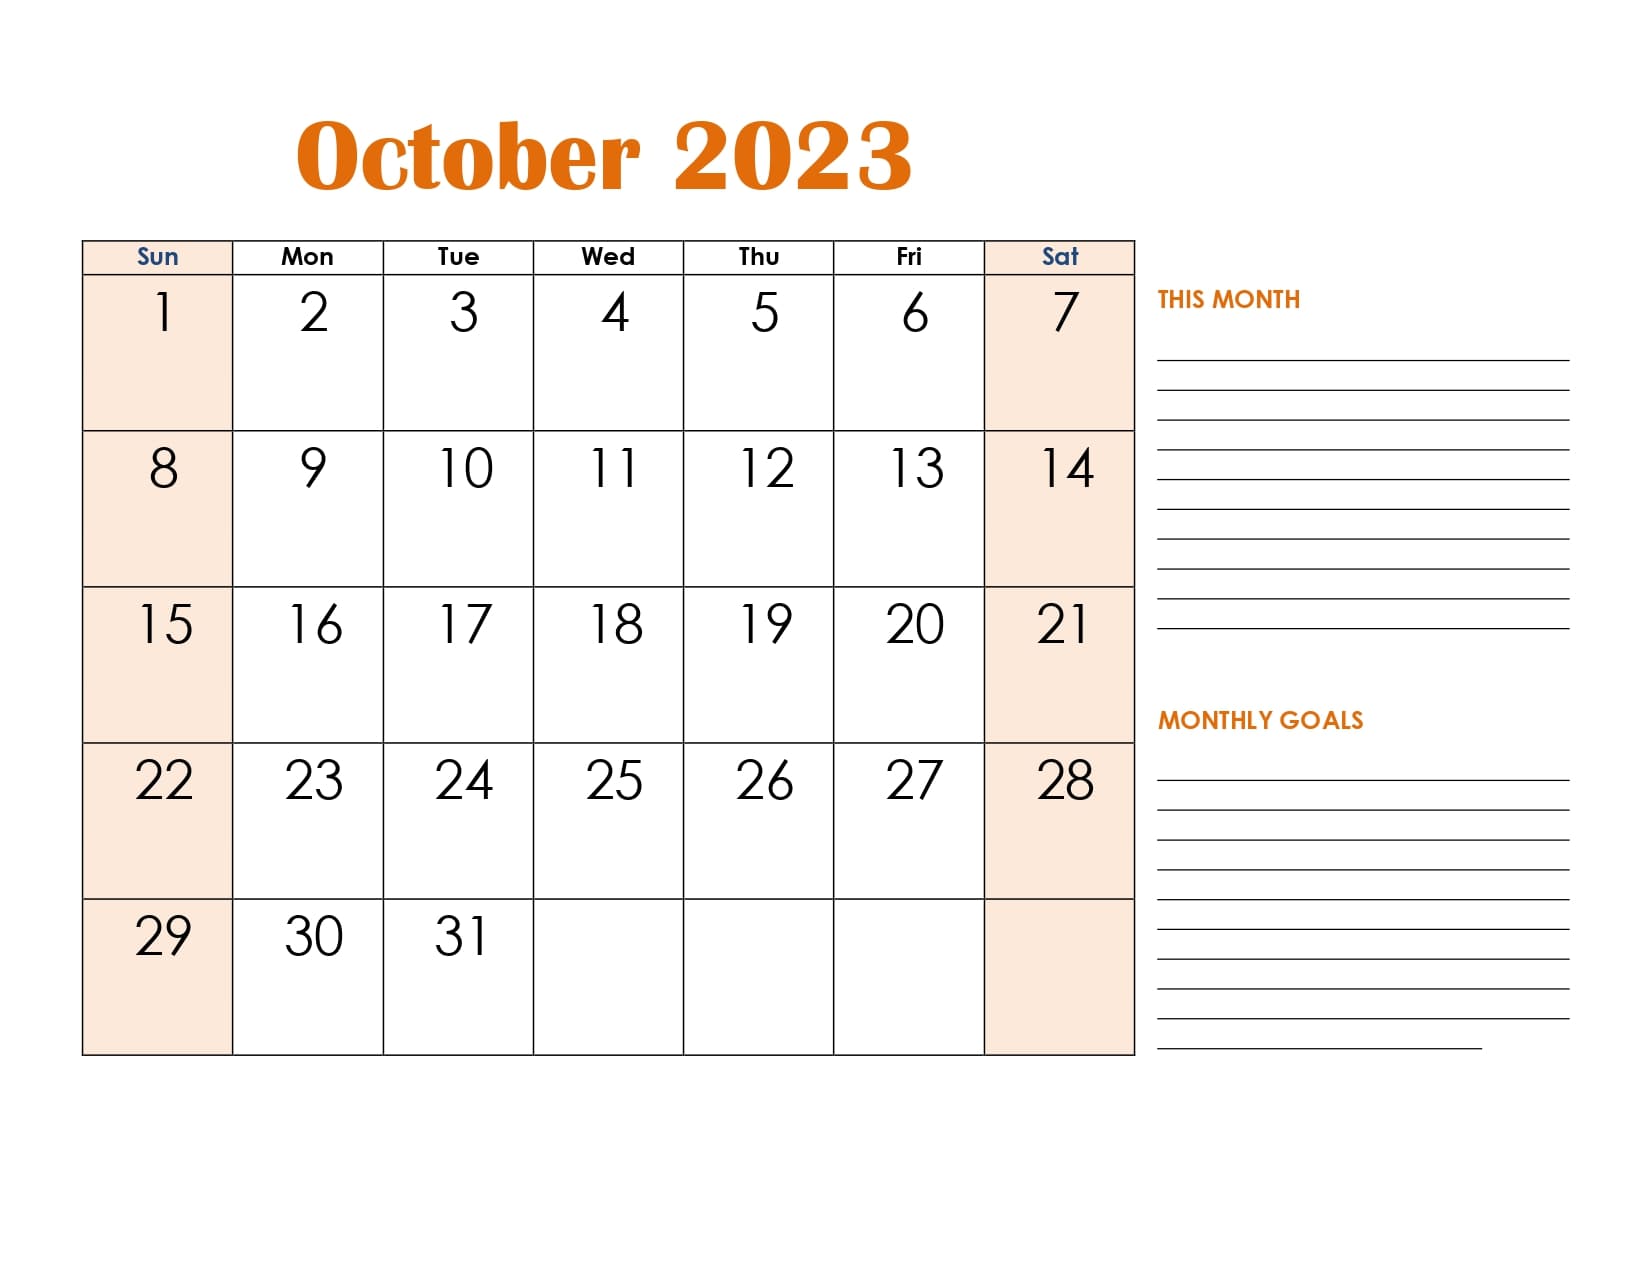 October 2023 Calendar with Goals